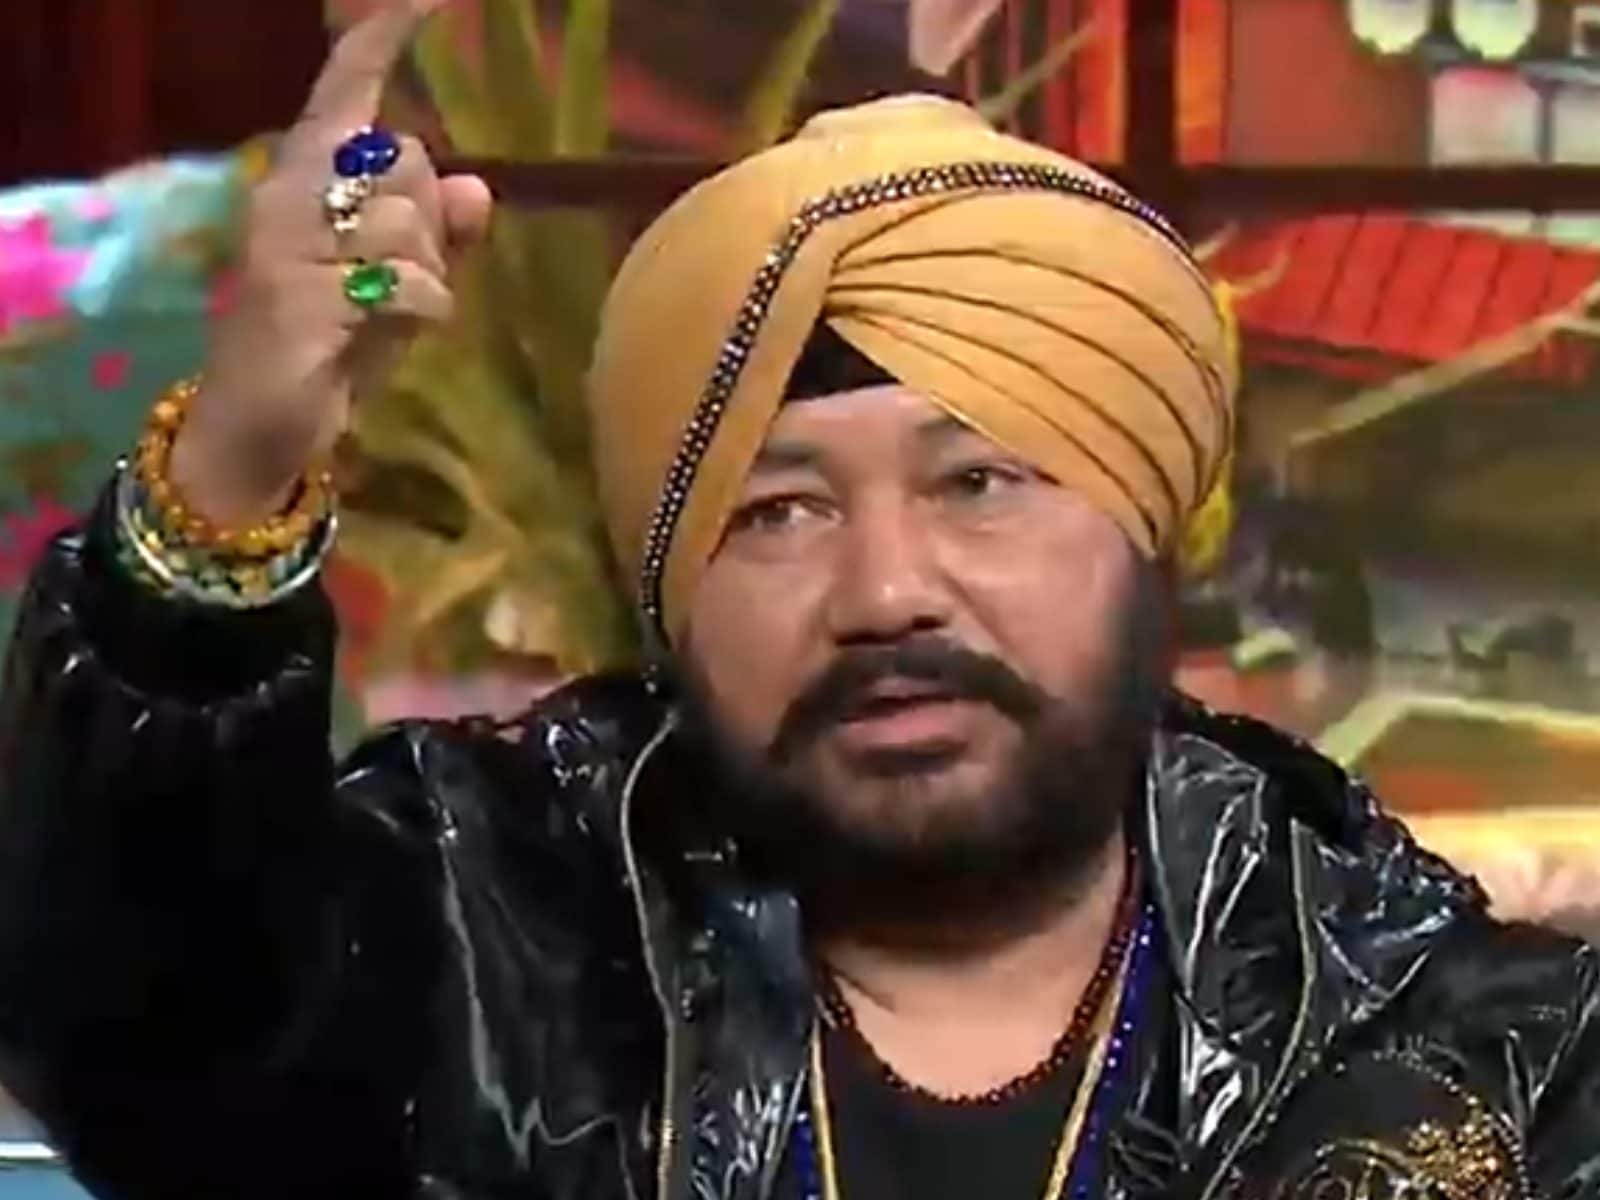 Fortnite turns legendary Punjabi song 'Tunak Tunak Tun' into an emote